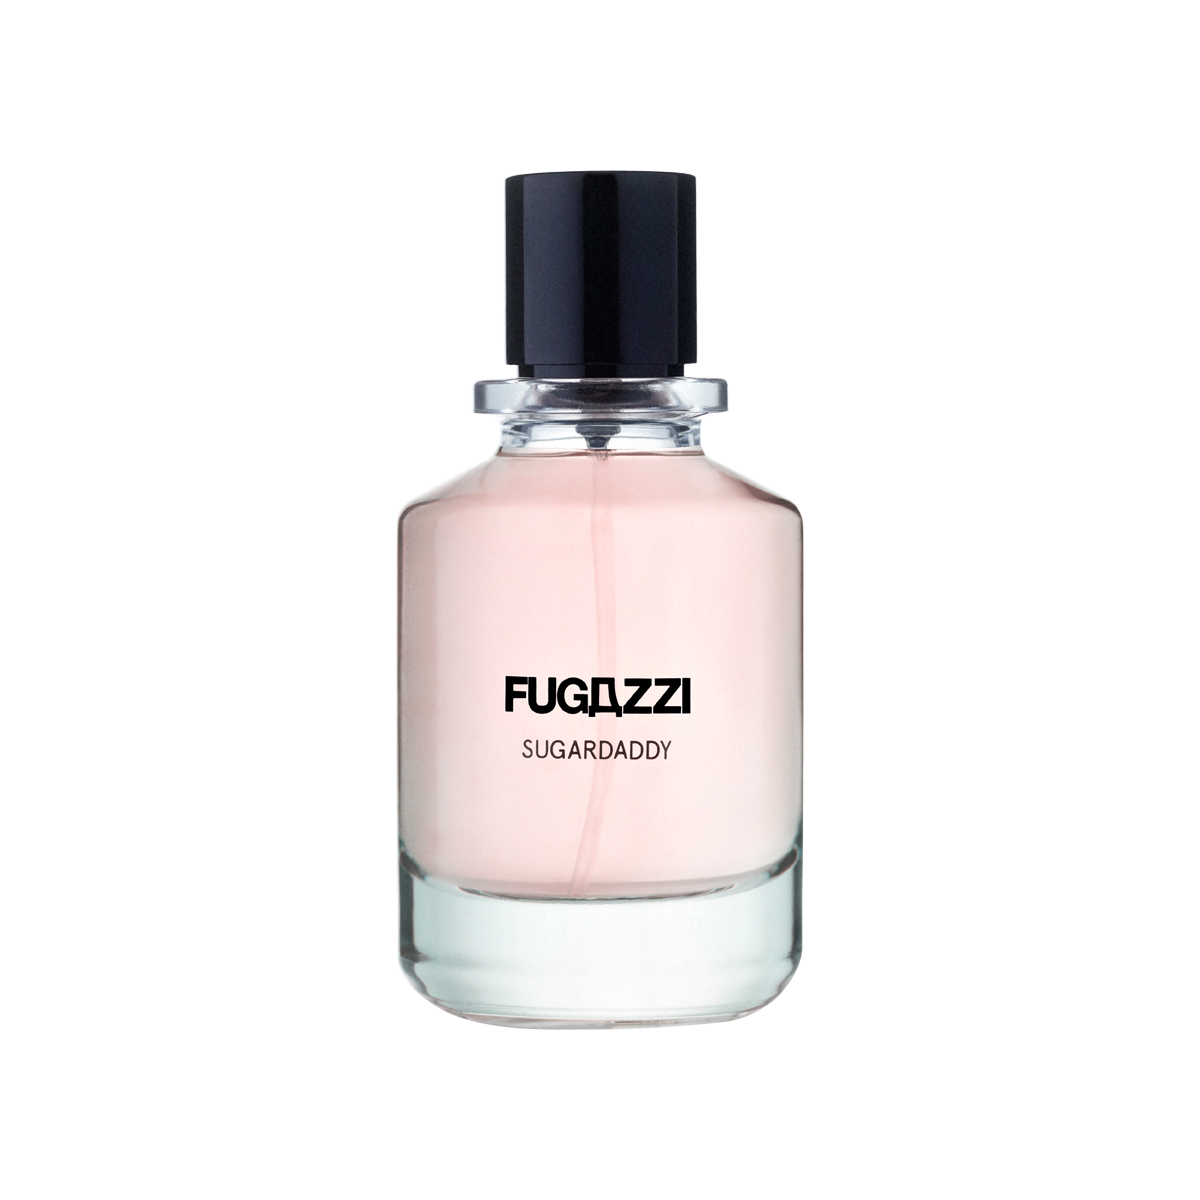 Fugazzi - Sugardaddy Eau de Parfum